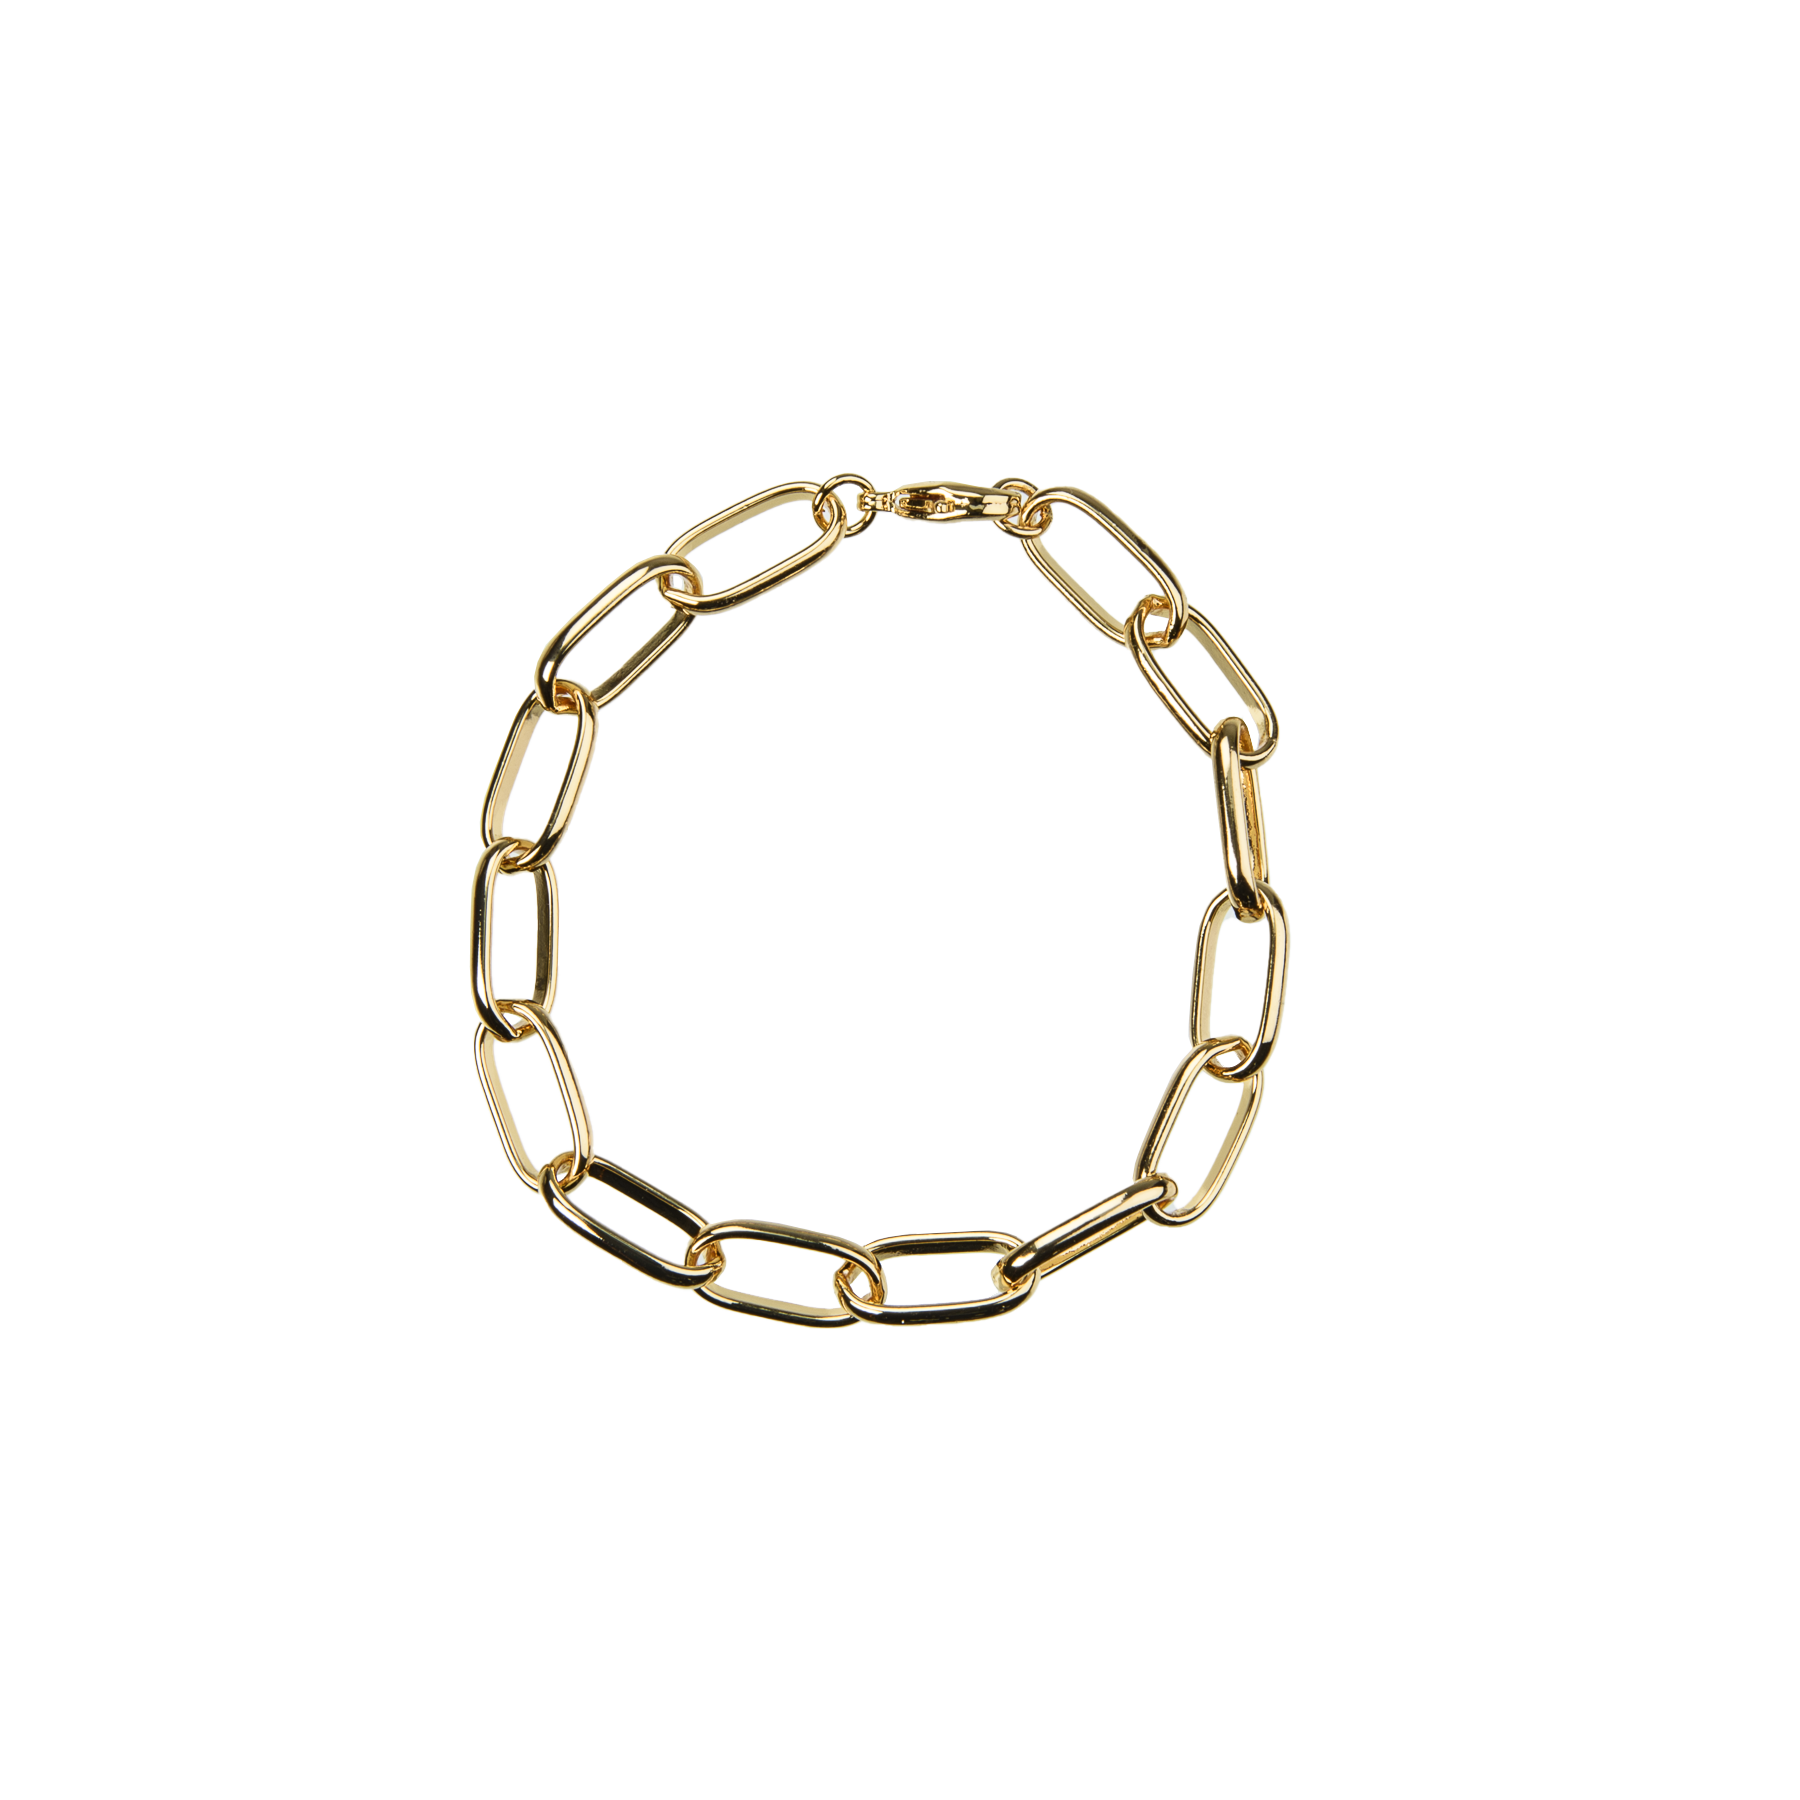 Image of Large chain bracelet from Emilia by Bon Dep